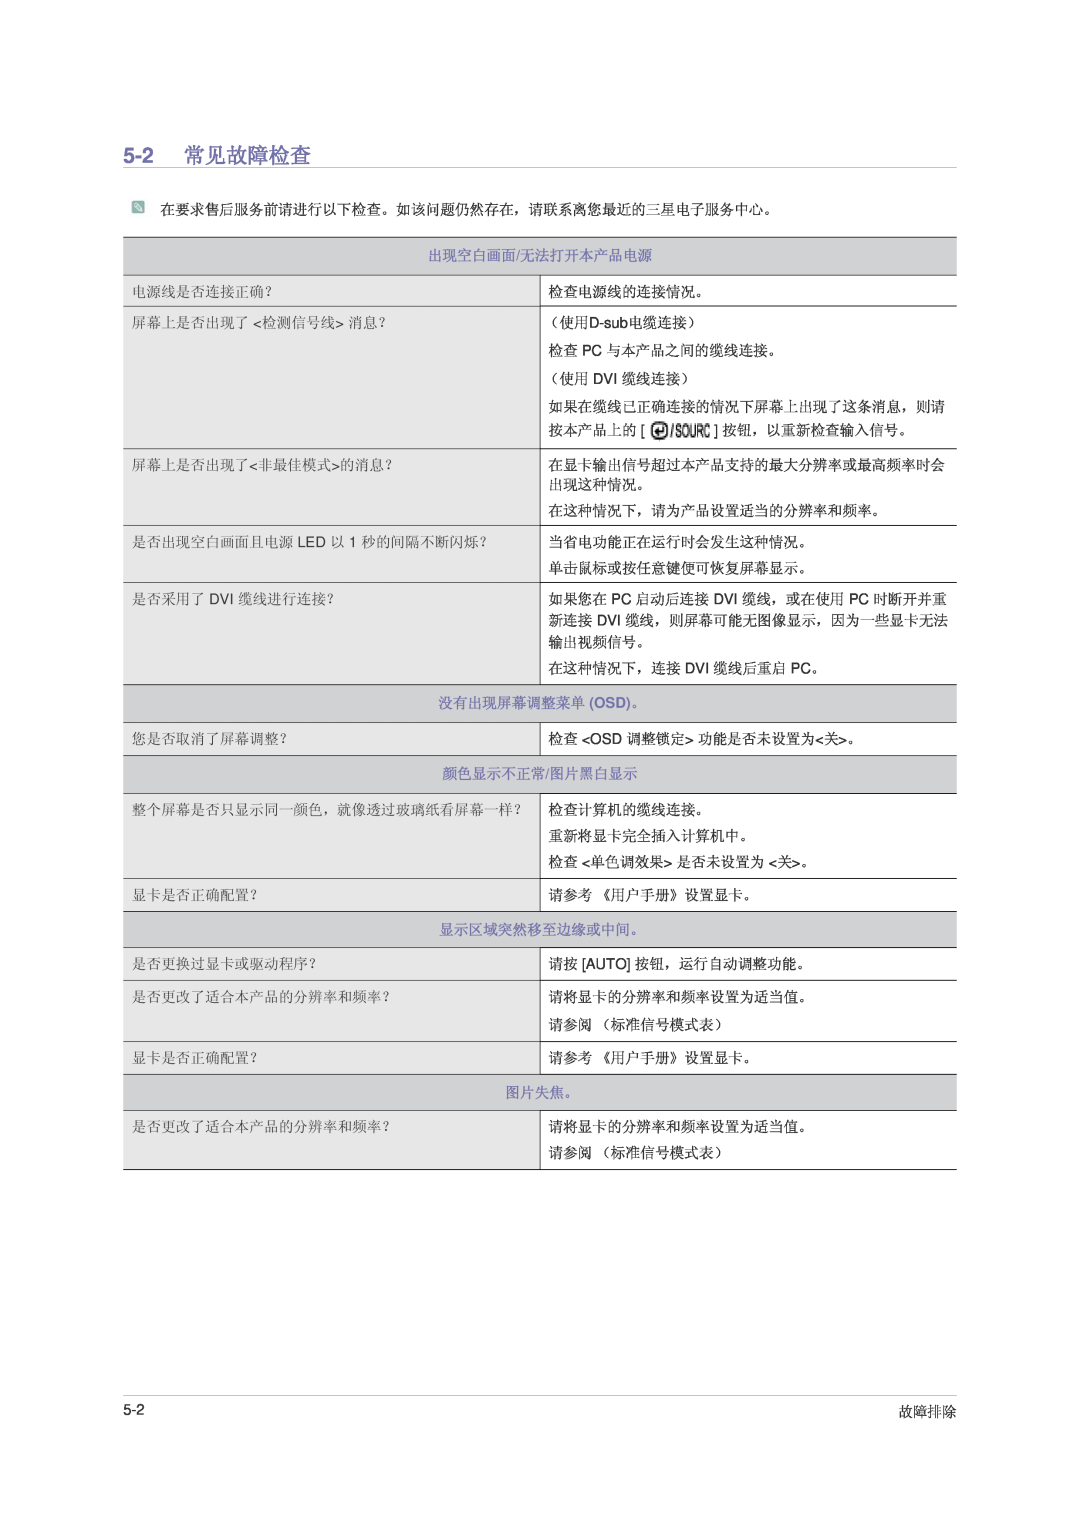 Samsung LS22PUHKFY/EN, LS24PUHKFV/EN, LS22PUHKFV/ZW, LS23PUHKF/EN, LS22PUHKF/EN, LS24PUHKF/EN manual 5-2 常见故障检查, 没有出现屏幕调整菜单 Osd。 